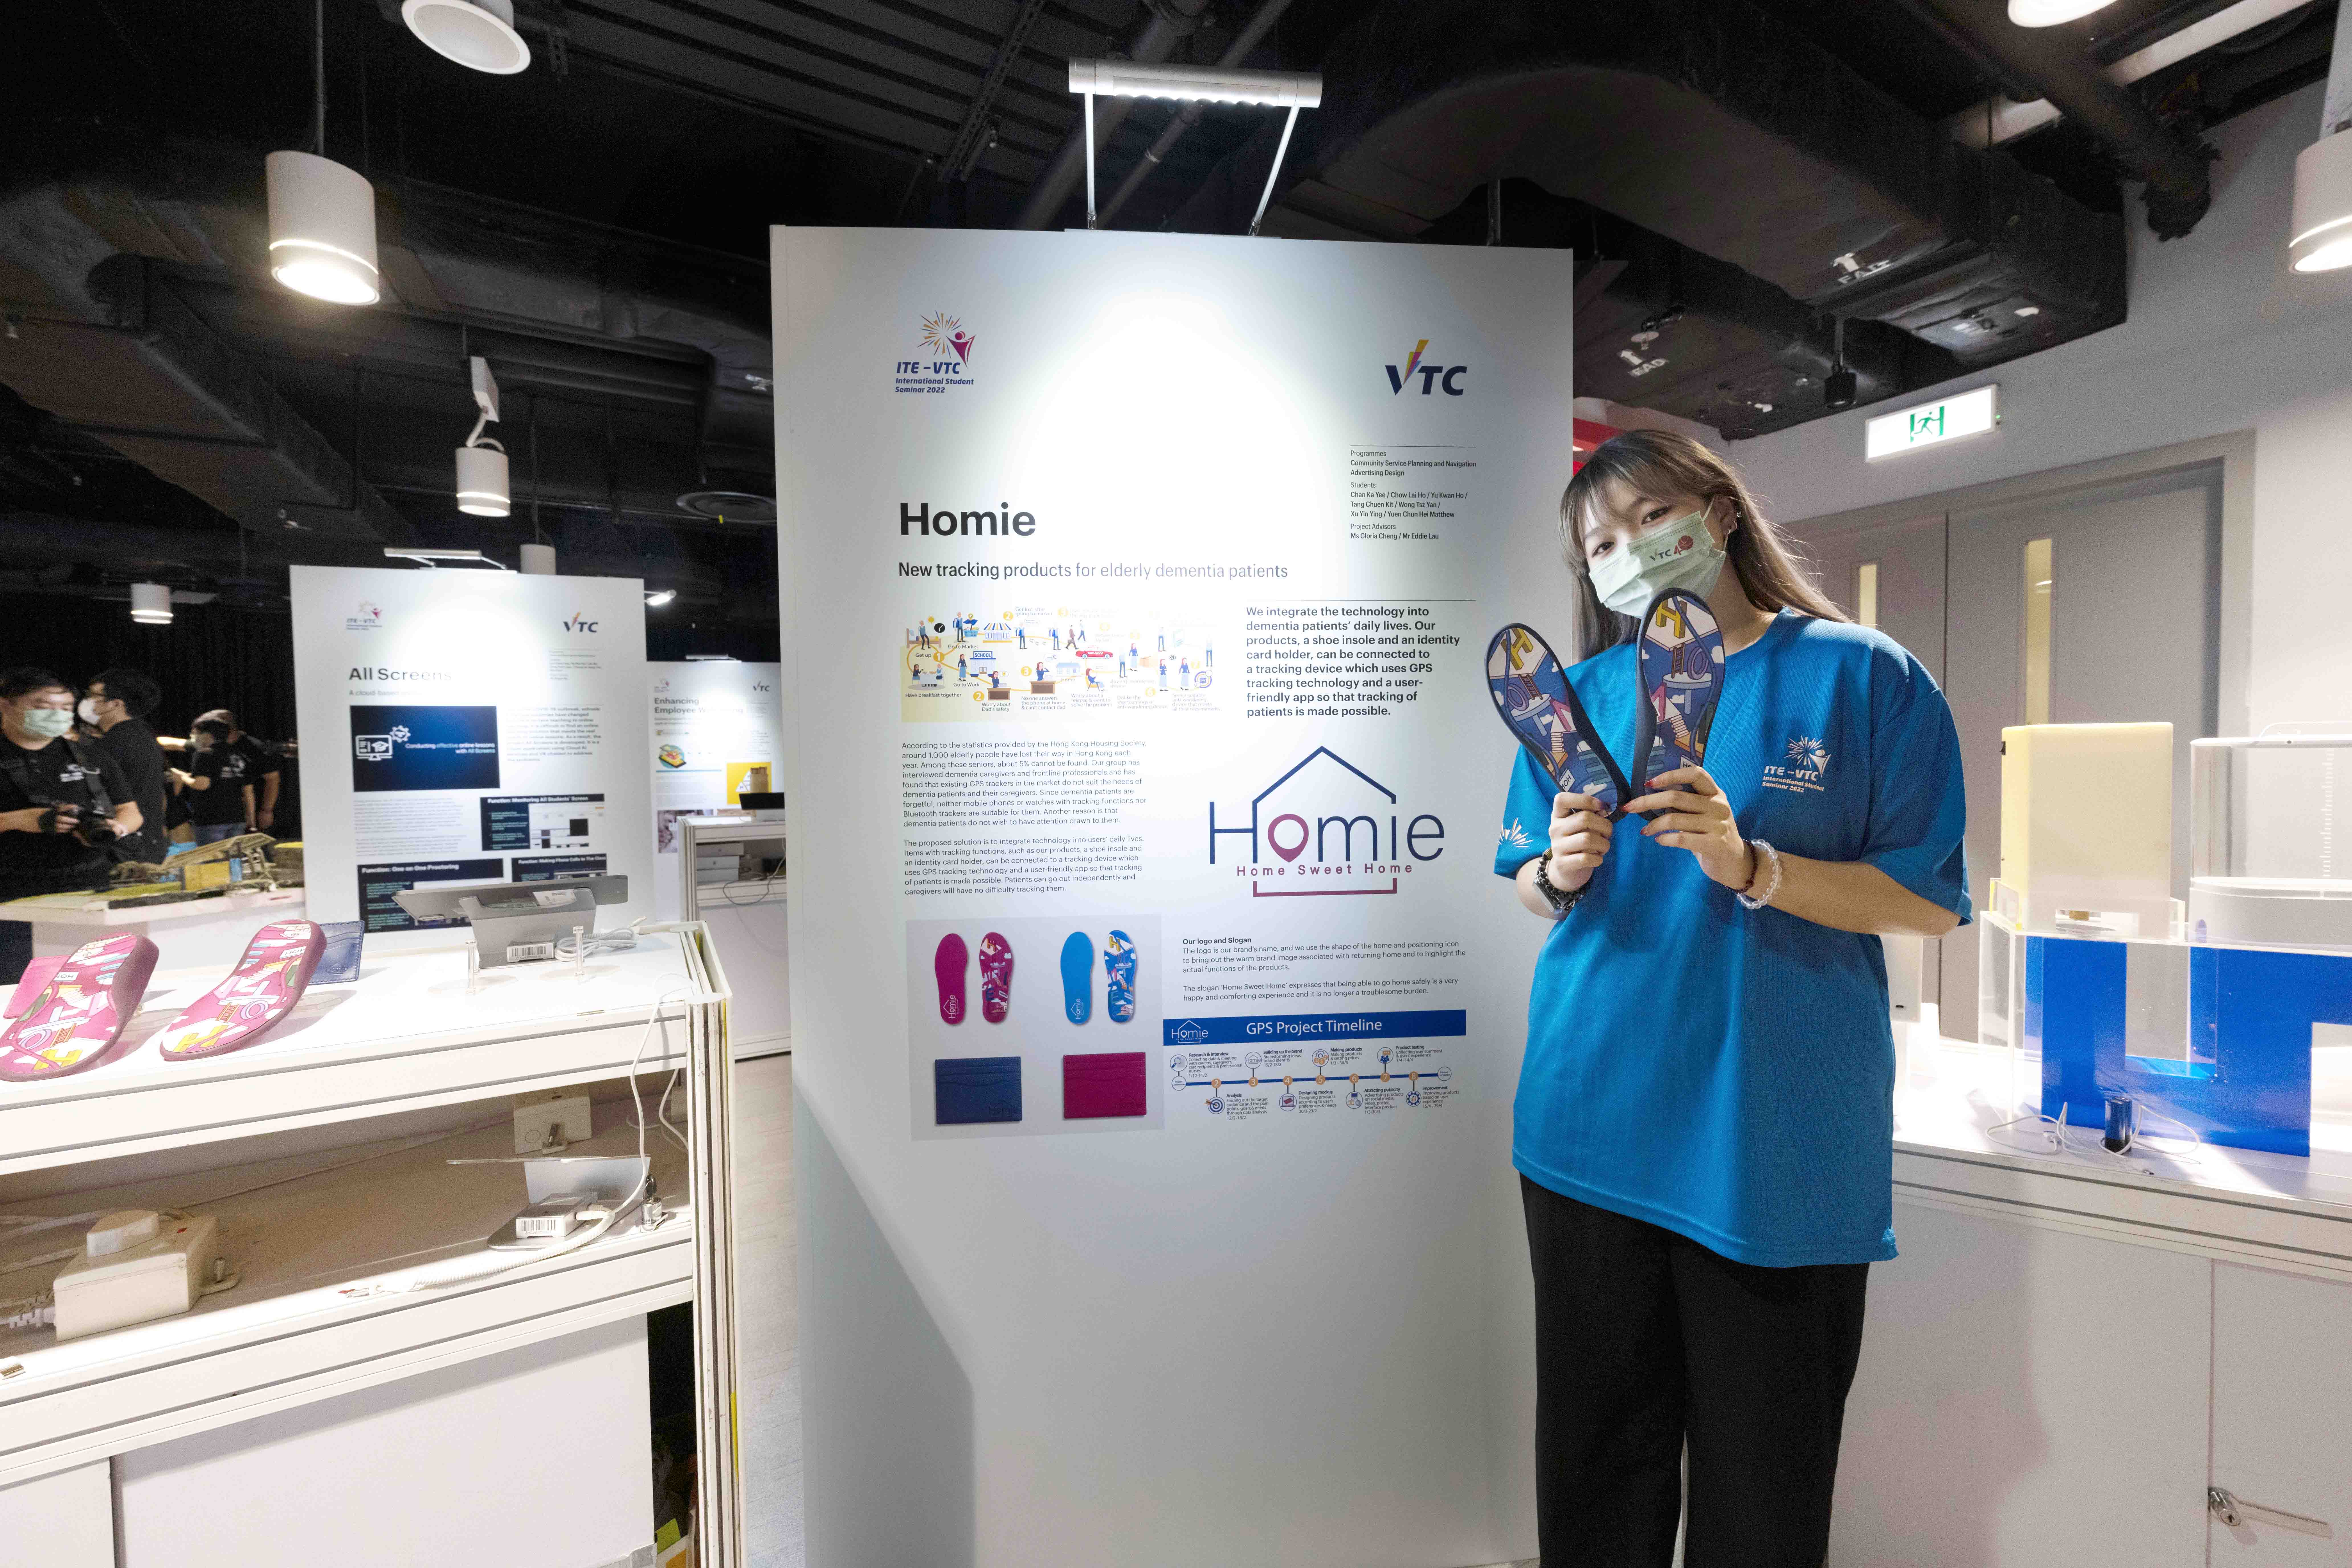 《Homie》由IVE社區服務策劃及領航高級文憑及香港知專設計學院（HKDI）廣告設計高級文憑學生共同研發，協助認知障礙症患者的家人及照顧者更容易知悉患者位置